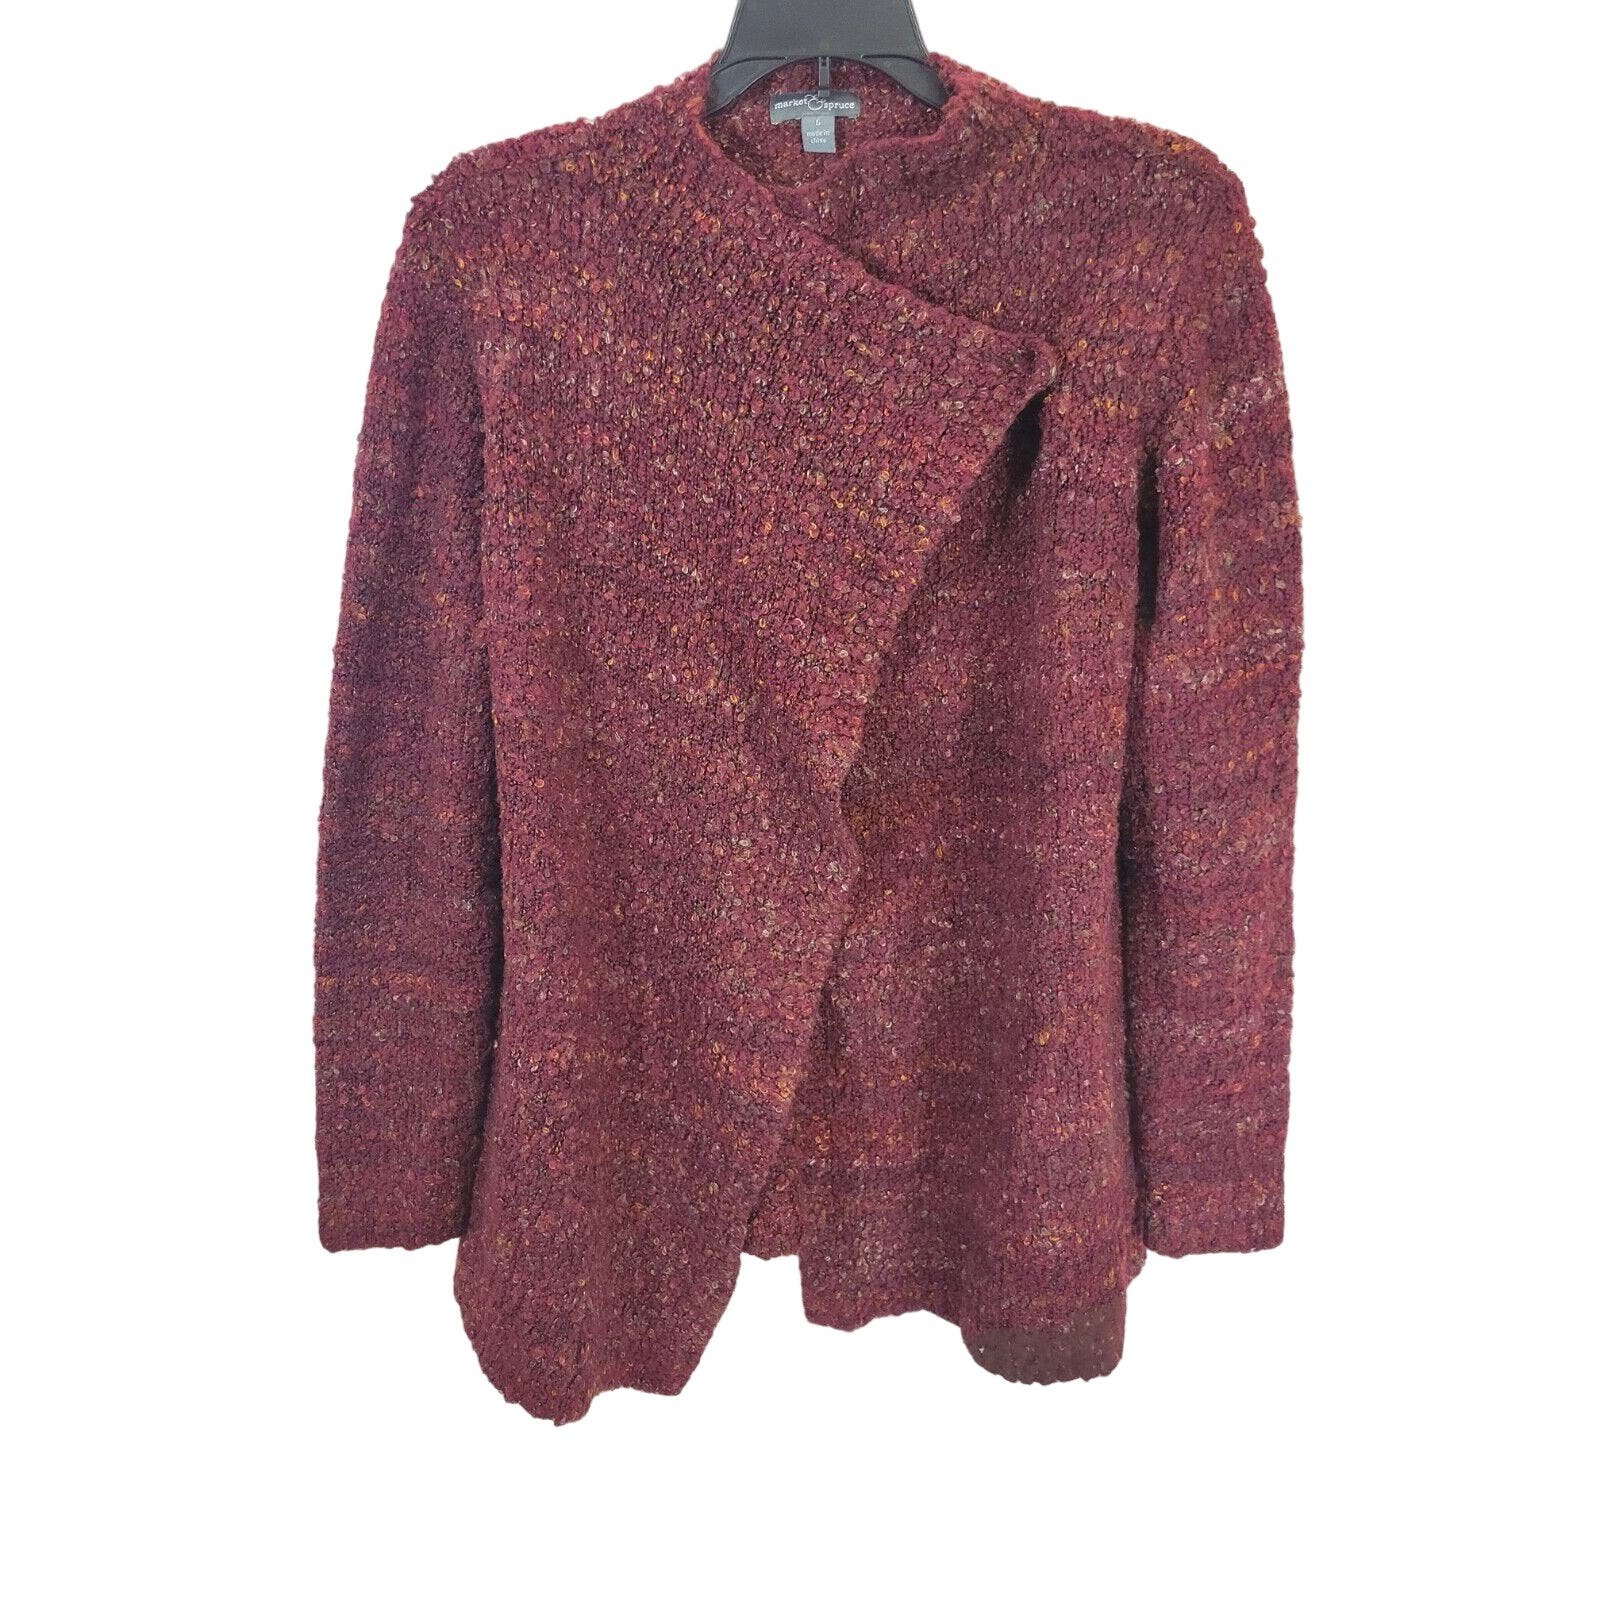 Special offer  Market & Spruce Burgundy Knit Long Sleeve Cardigan Sweater Women´s Size Large k7xQNJMBl Great